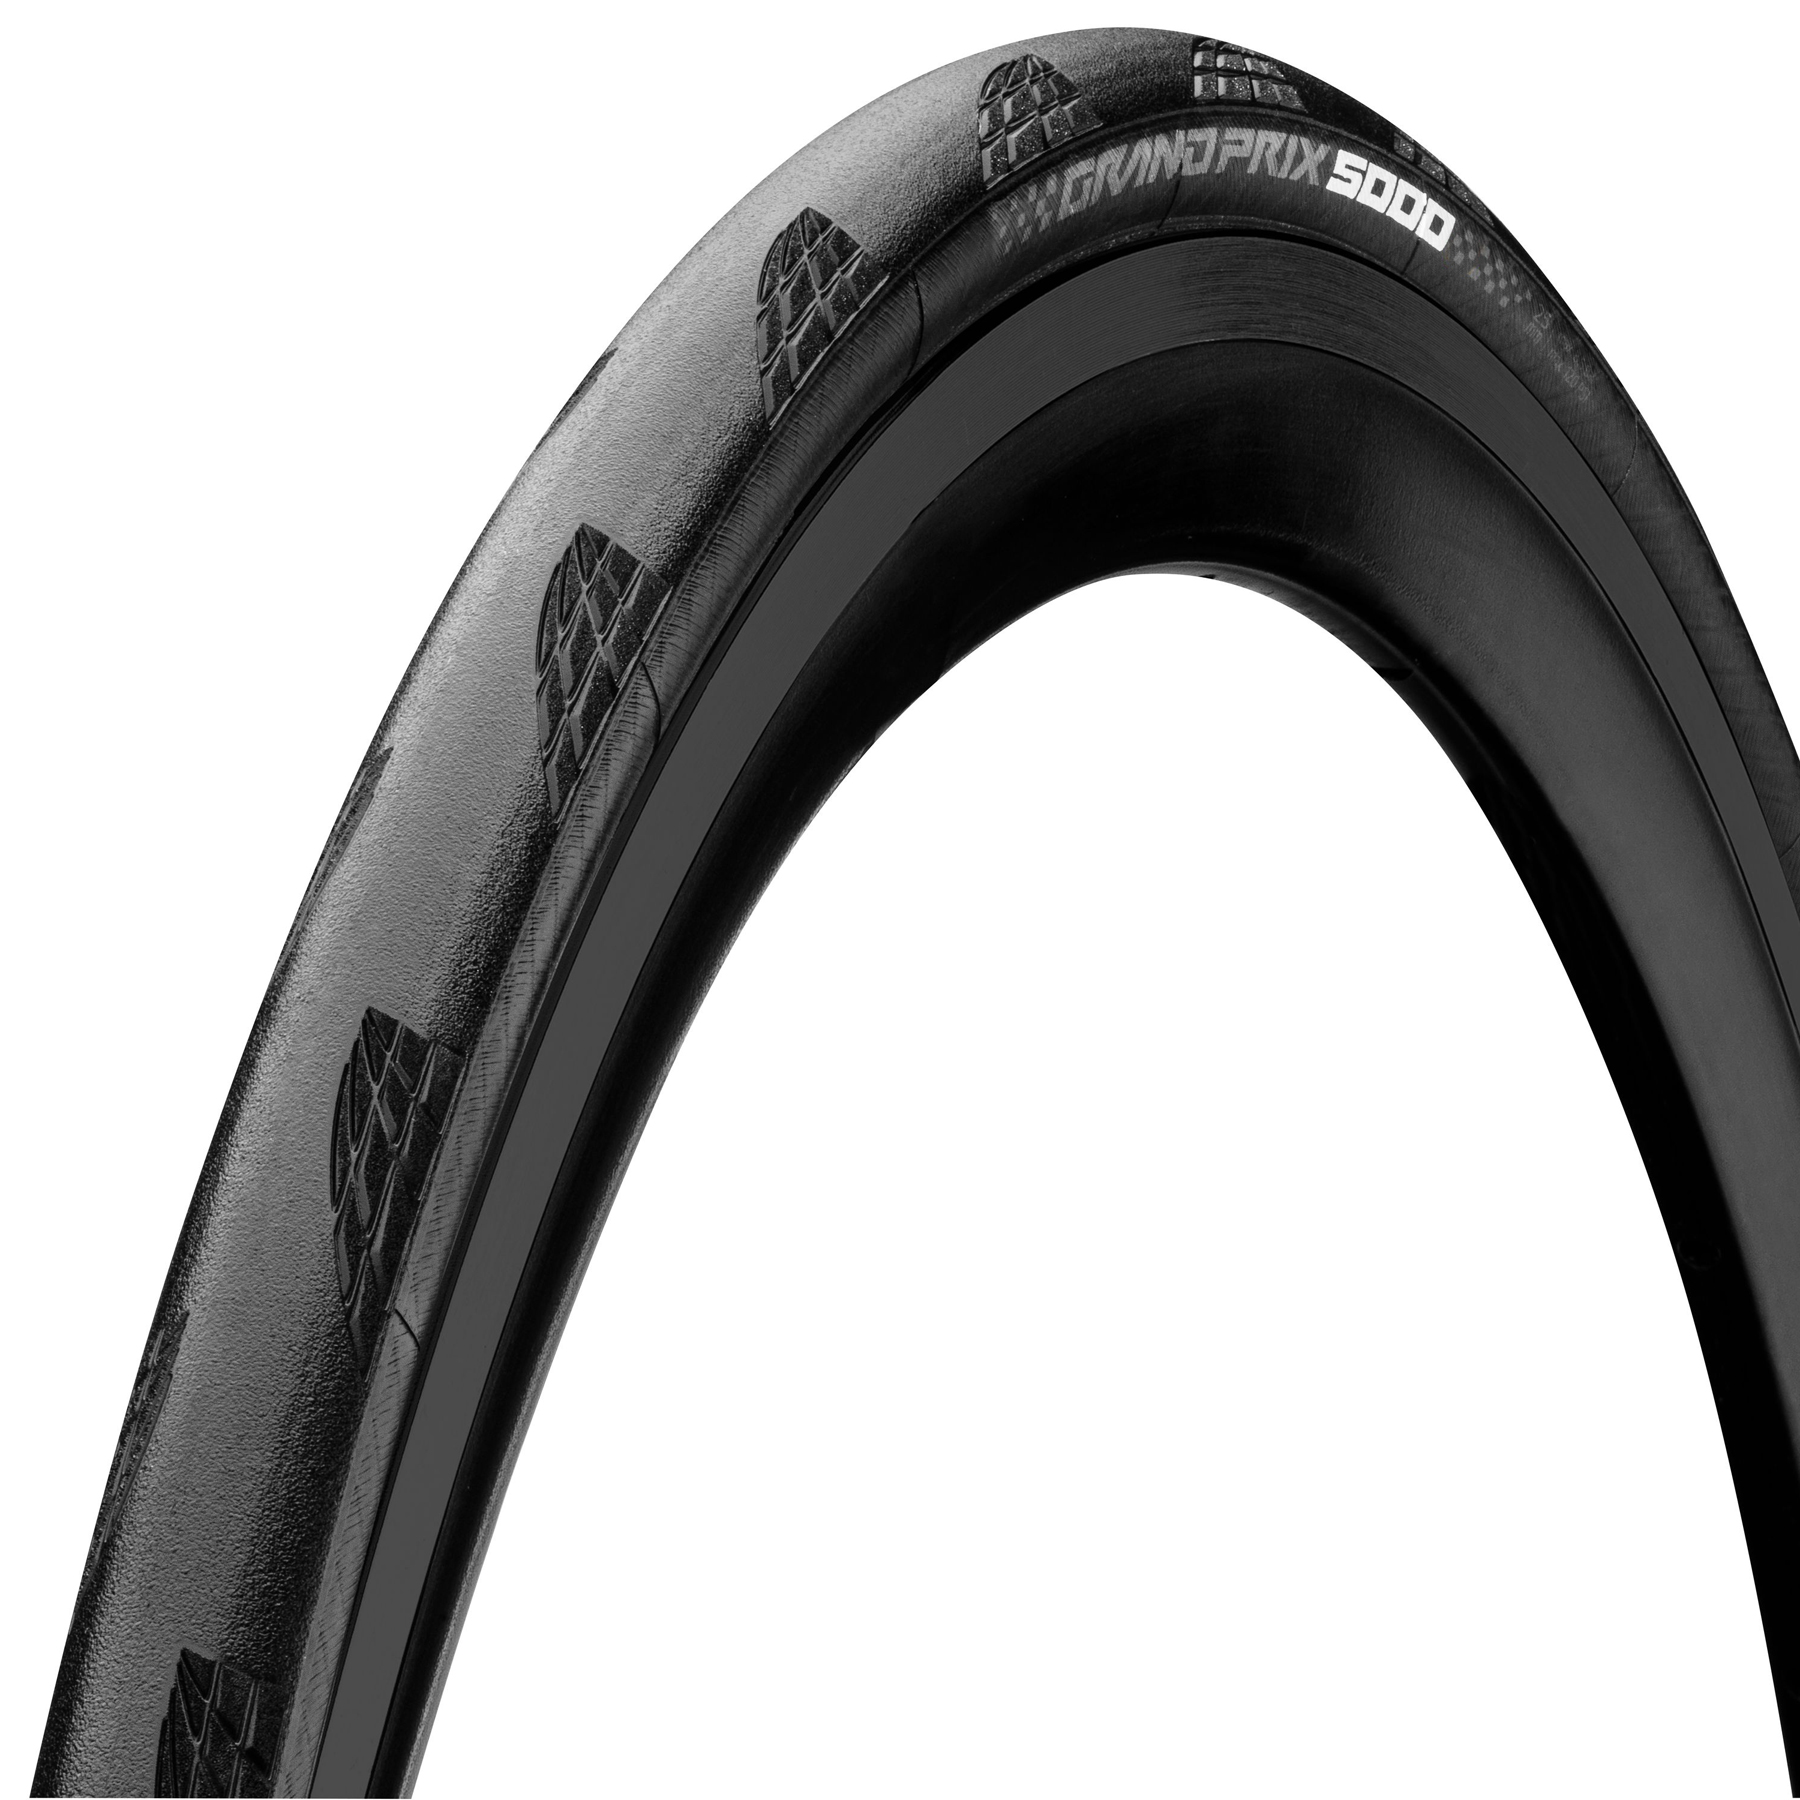 Productfoto van Continental Grand Prix 5000 Vouwband - E50 - 30-622 - zwart